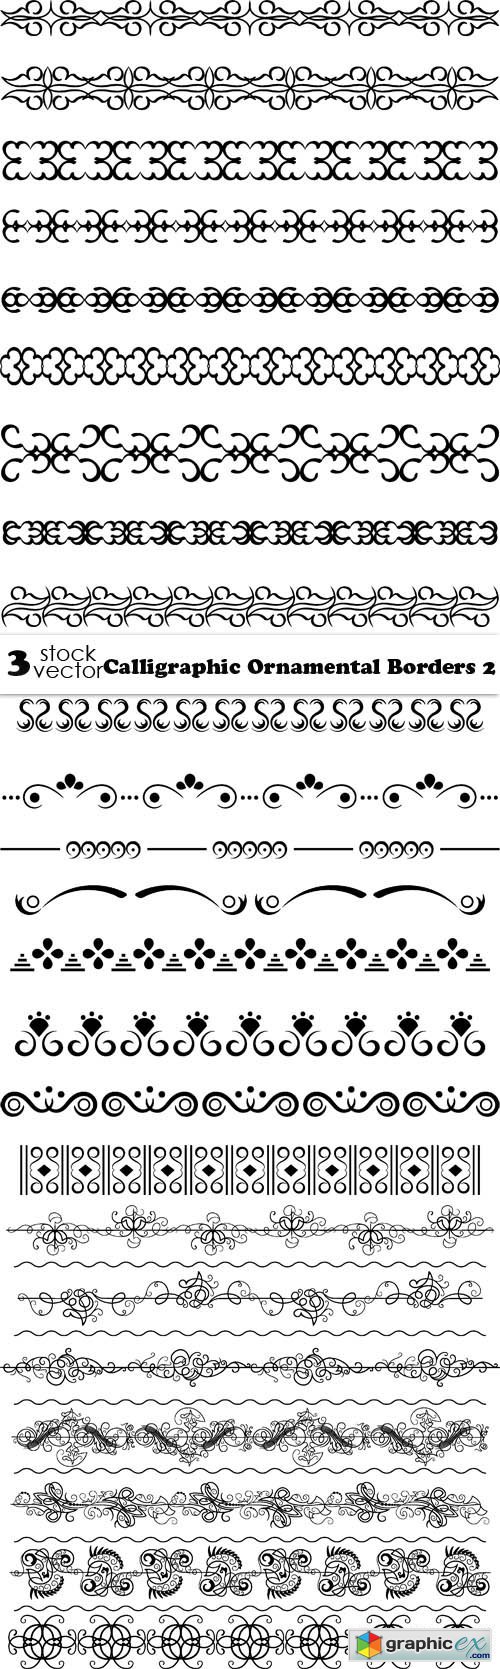 Vectors - Calligraphic Ornamental Borders 2